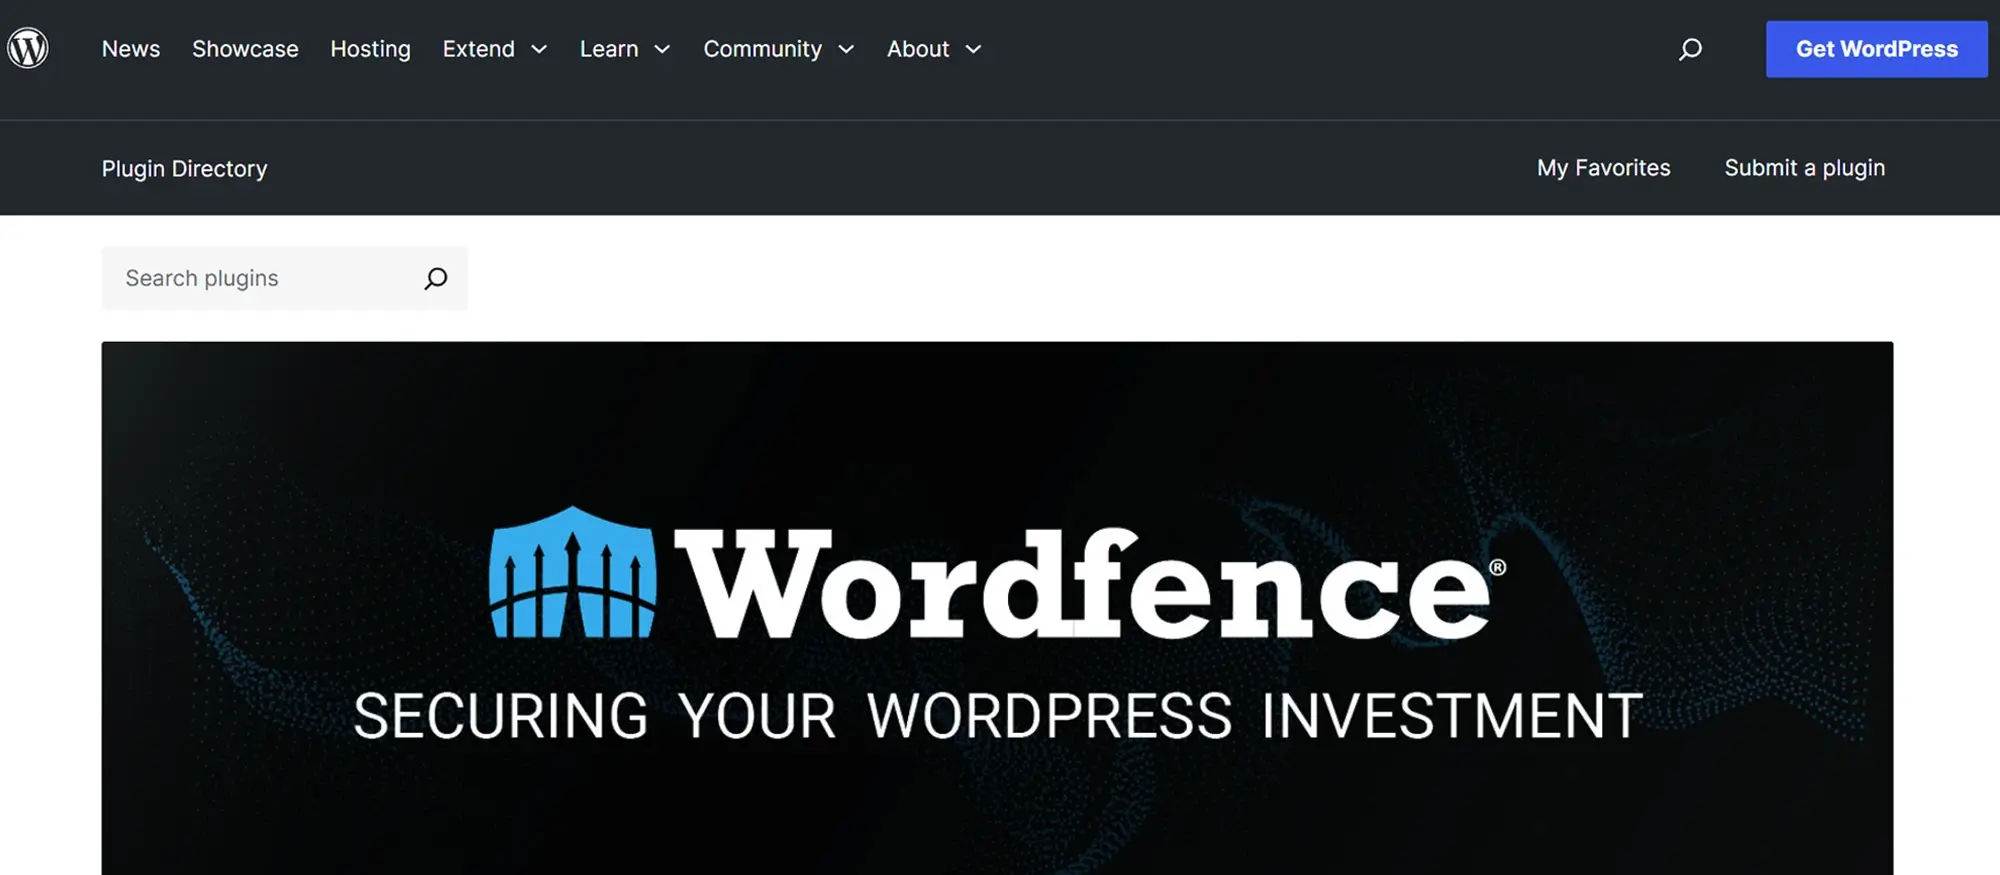 WordPress Plugins Feature